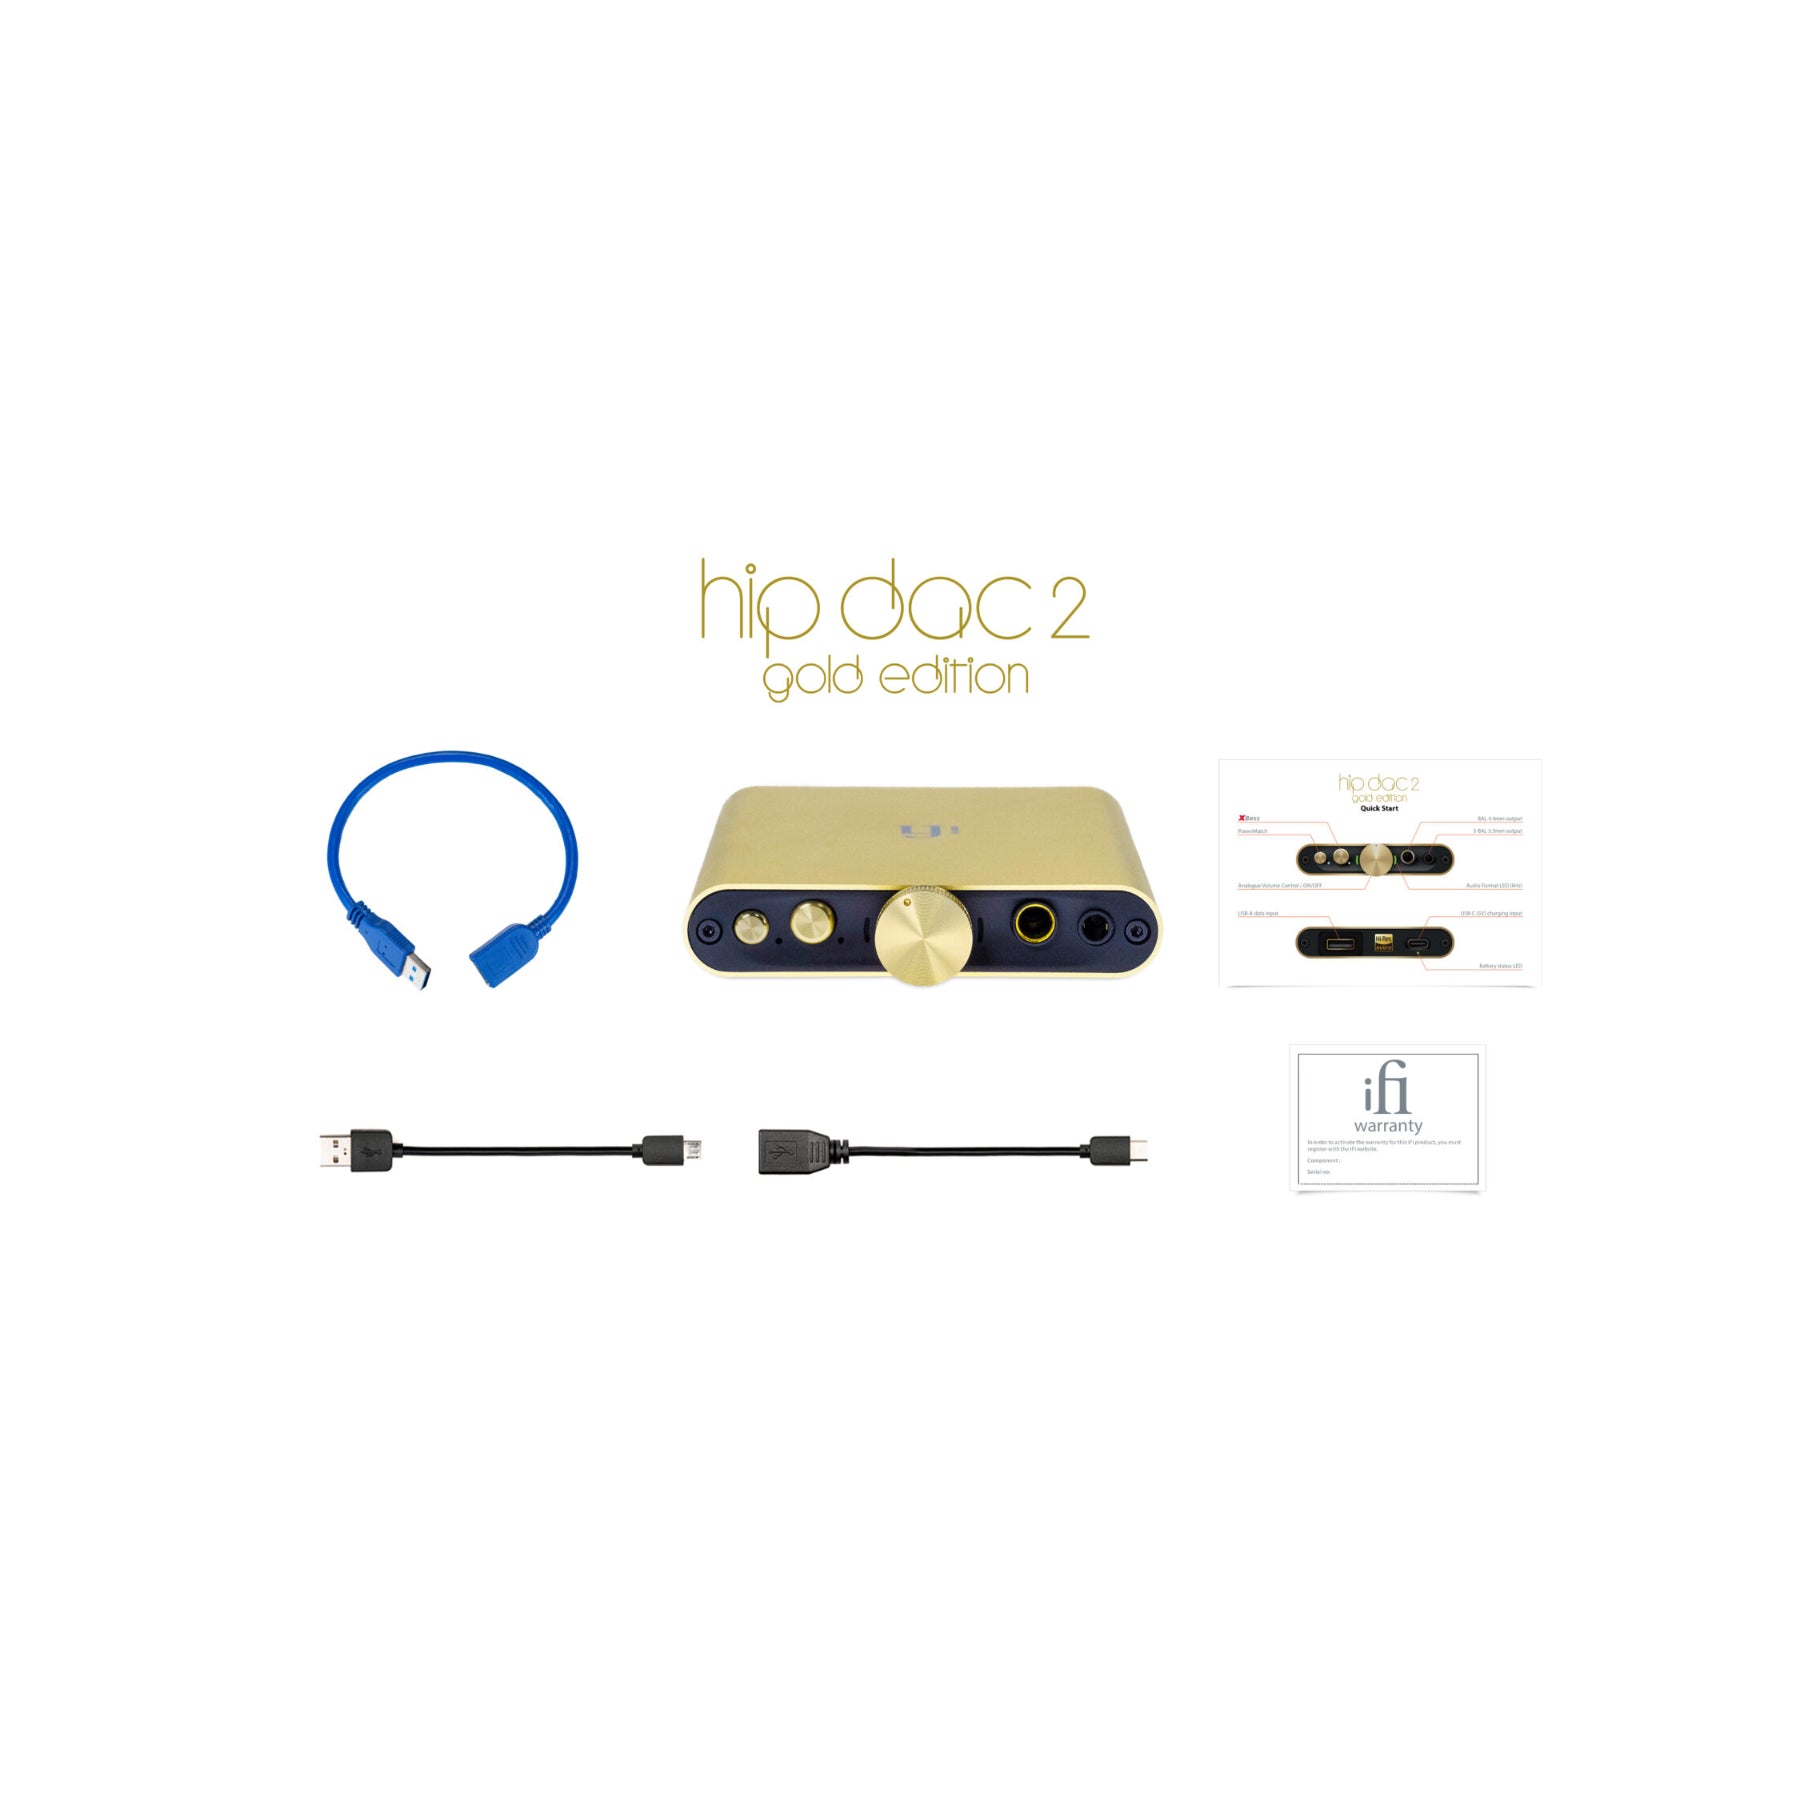 iFi Hip-Dac2 - Portable Balanced DAC/AMP - Gold Edition | ListenUp